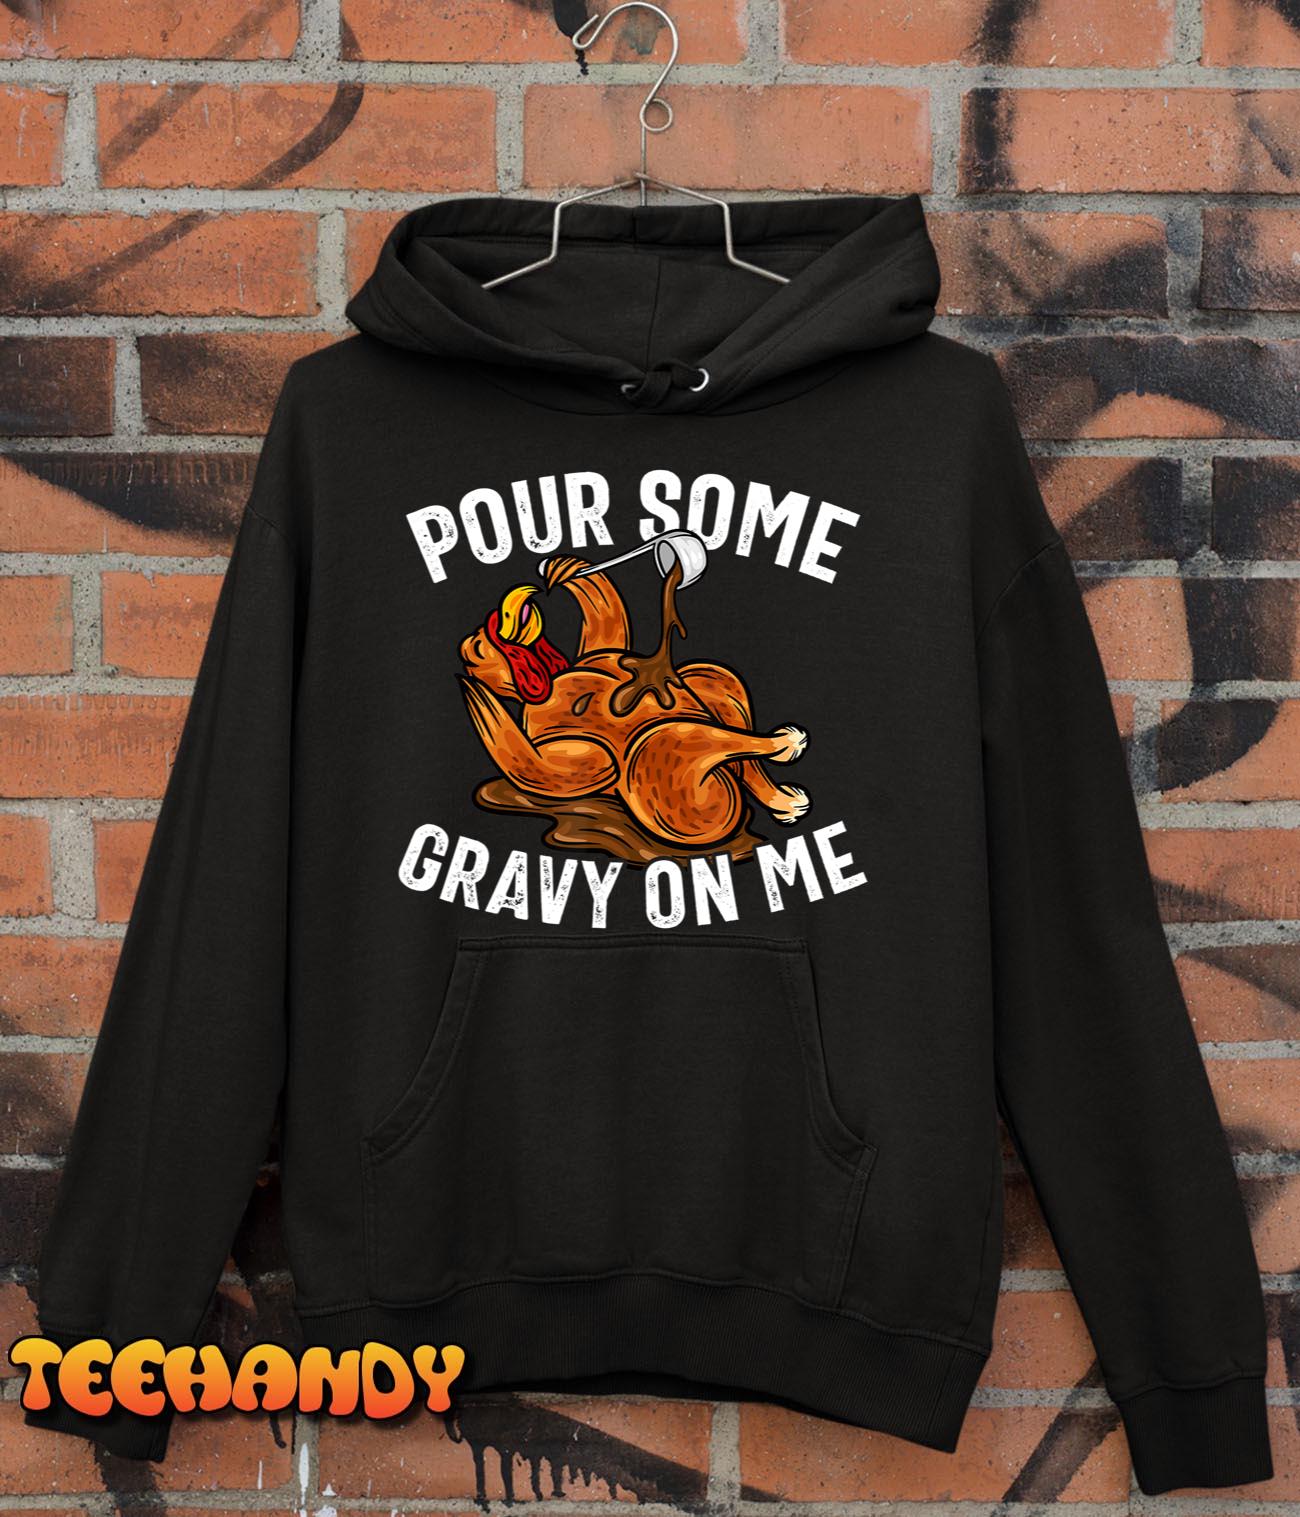 Funny Turkey Tshirt, Funny Thanksgiving Tee, Turkey Lover T-Shirt